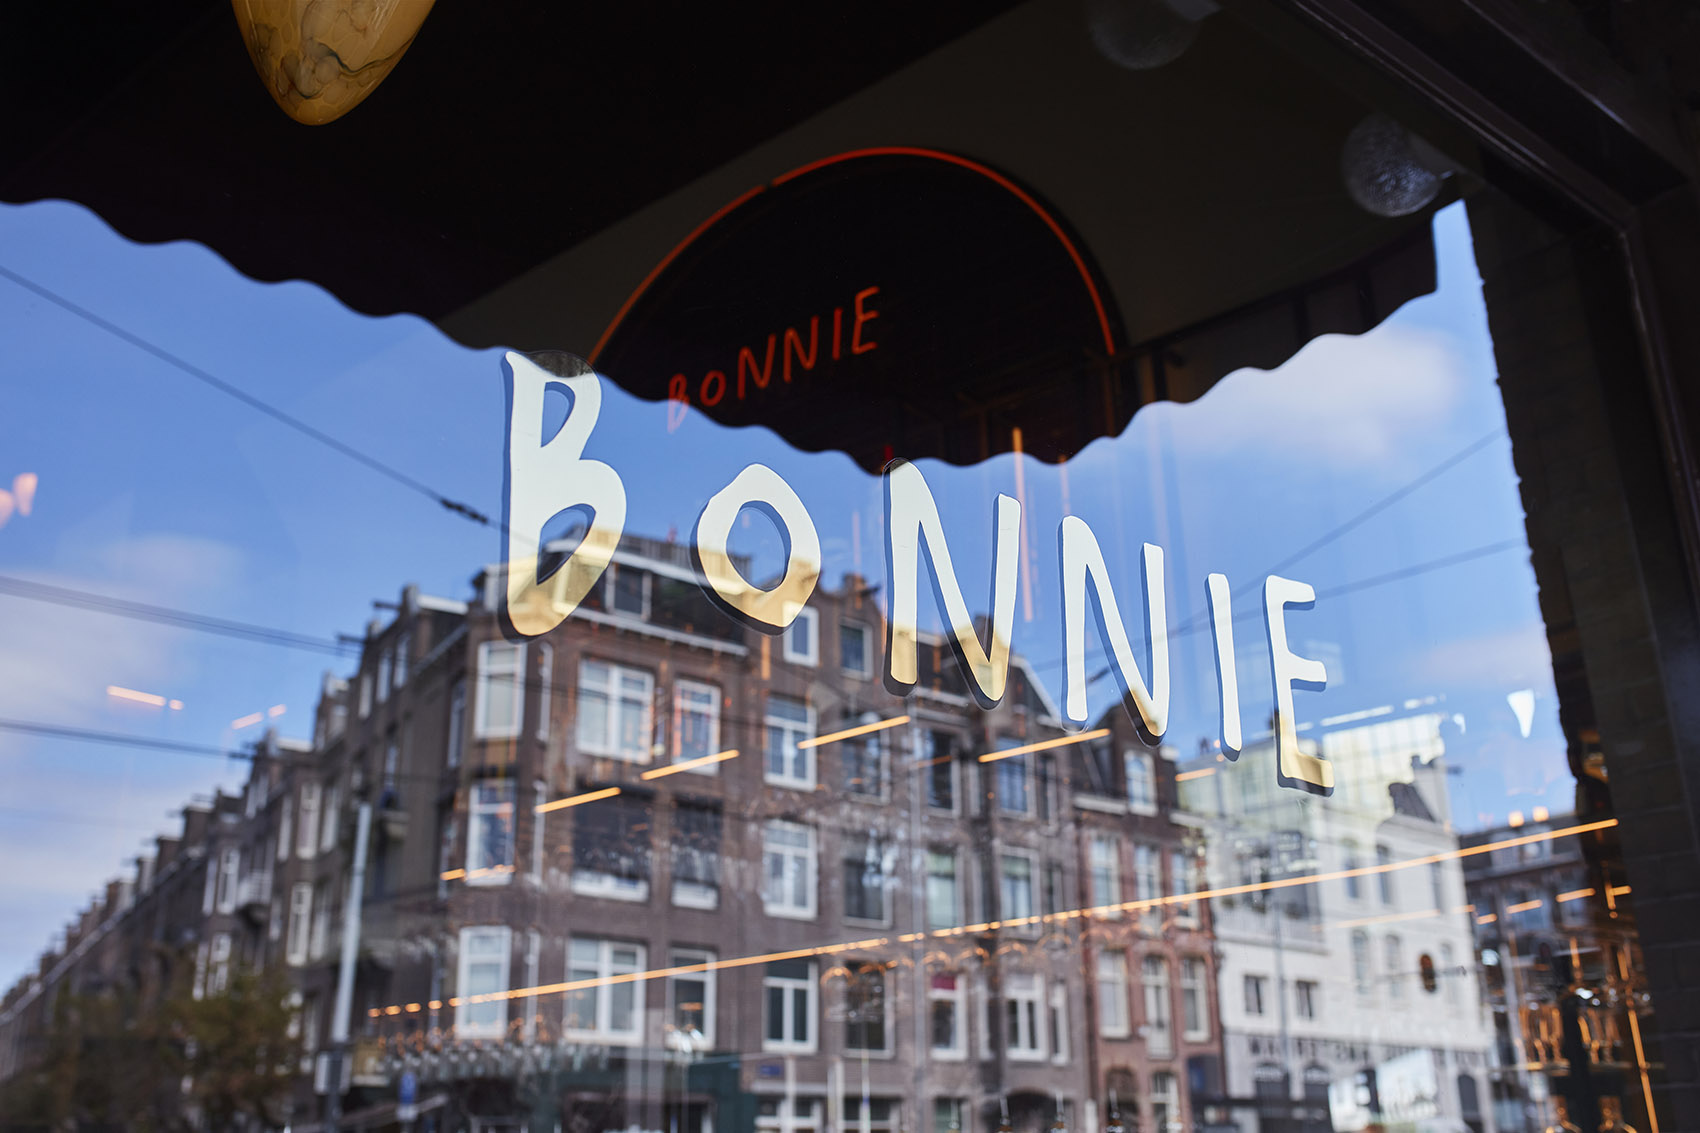 Bonnie酒吧，阿姆斯特丹/在旧式风格和温暖的亲切感之间取得完美平衡-85